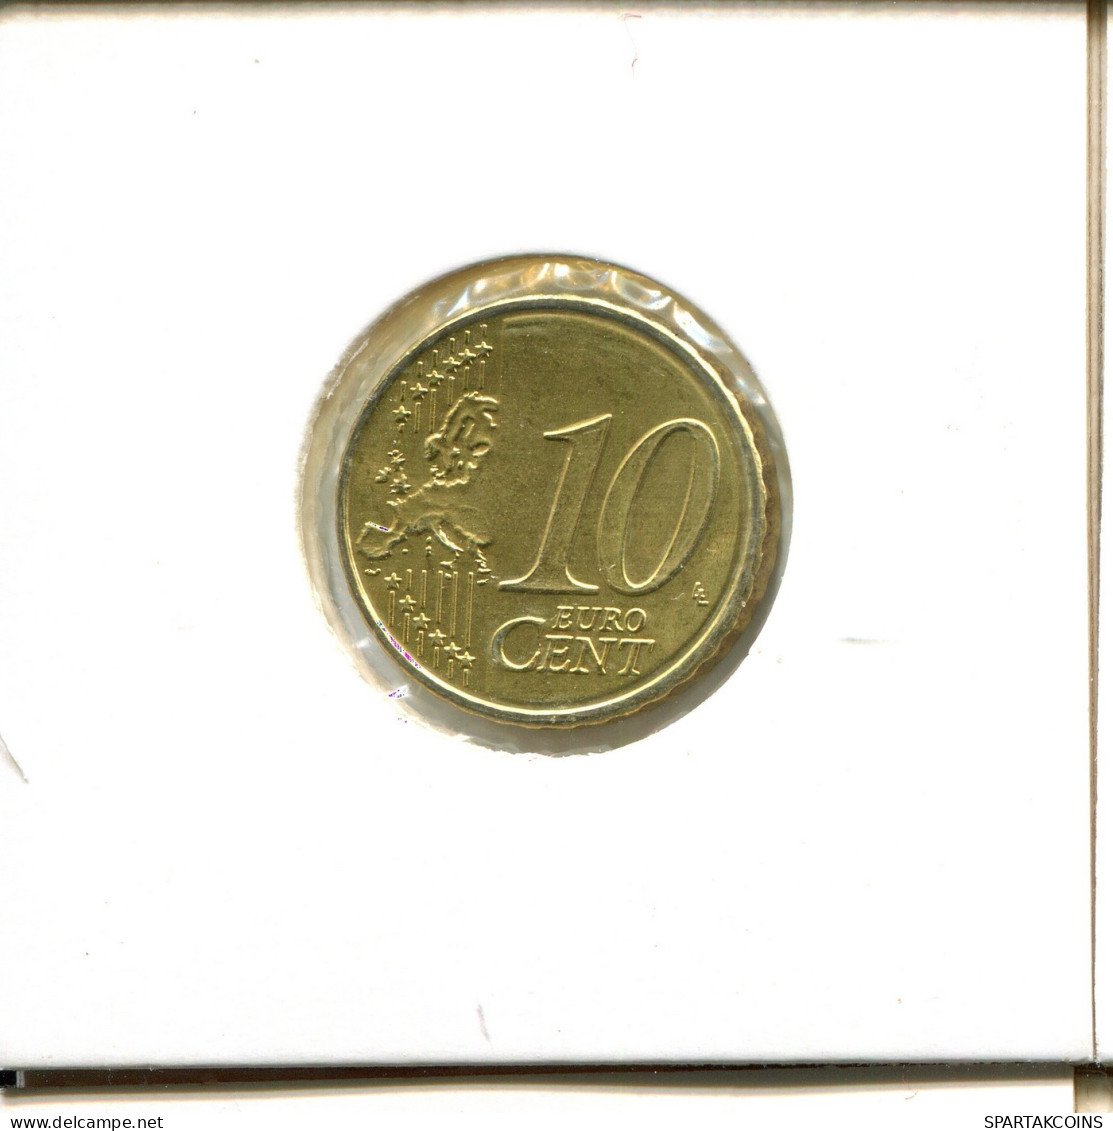 10 EURO CENTS 2008 MALTA Münze #EU531.D.A - Malte